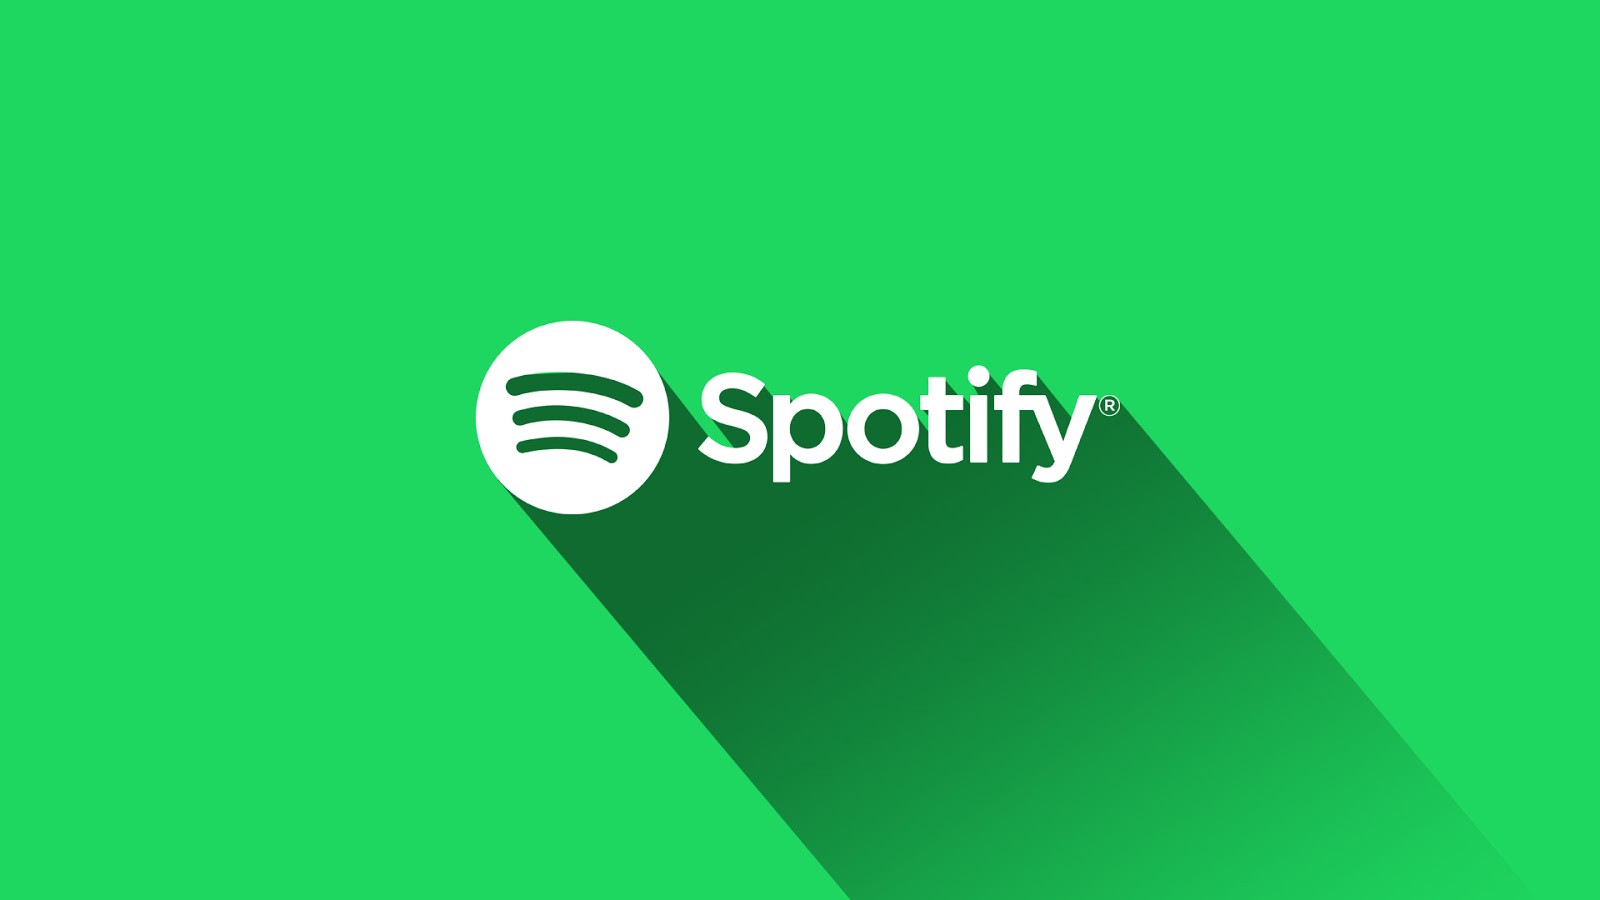 Free Premium Account Of Spotify